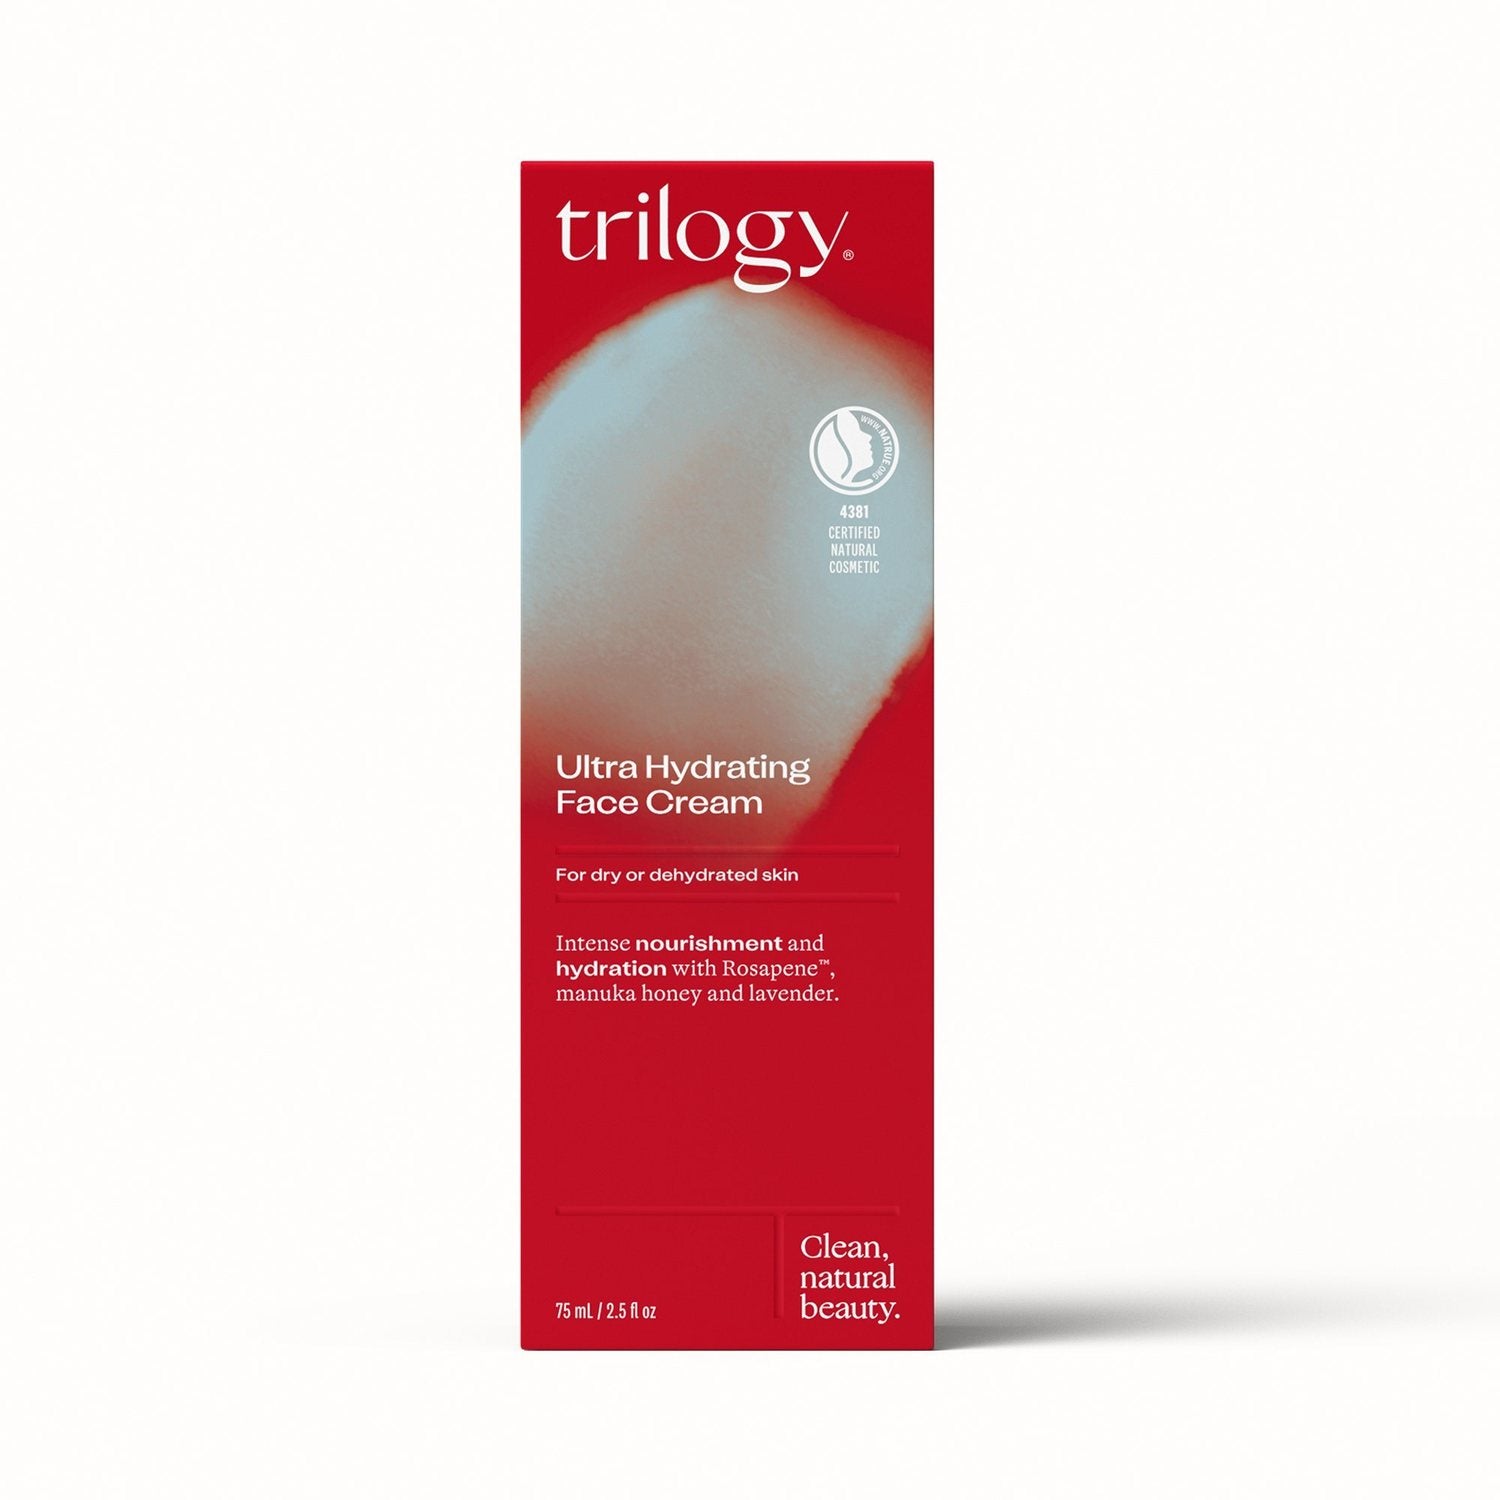 Trilogy Ultra Hydrating Face Cream 75ml.